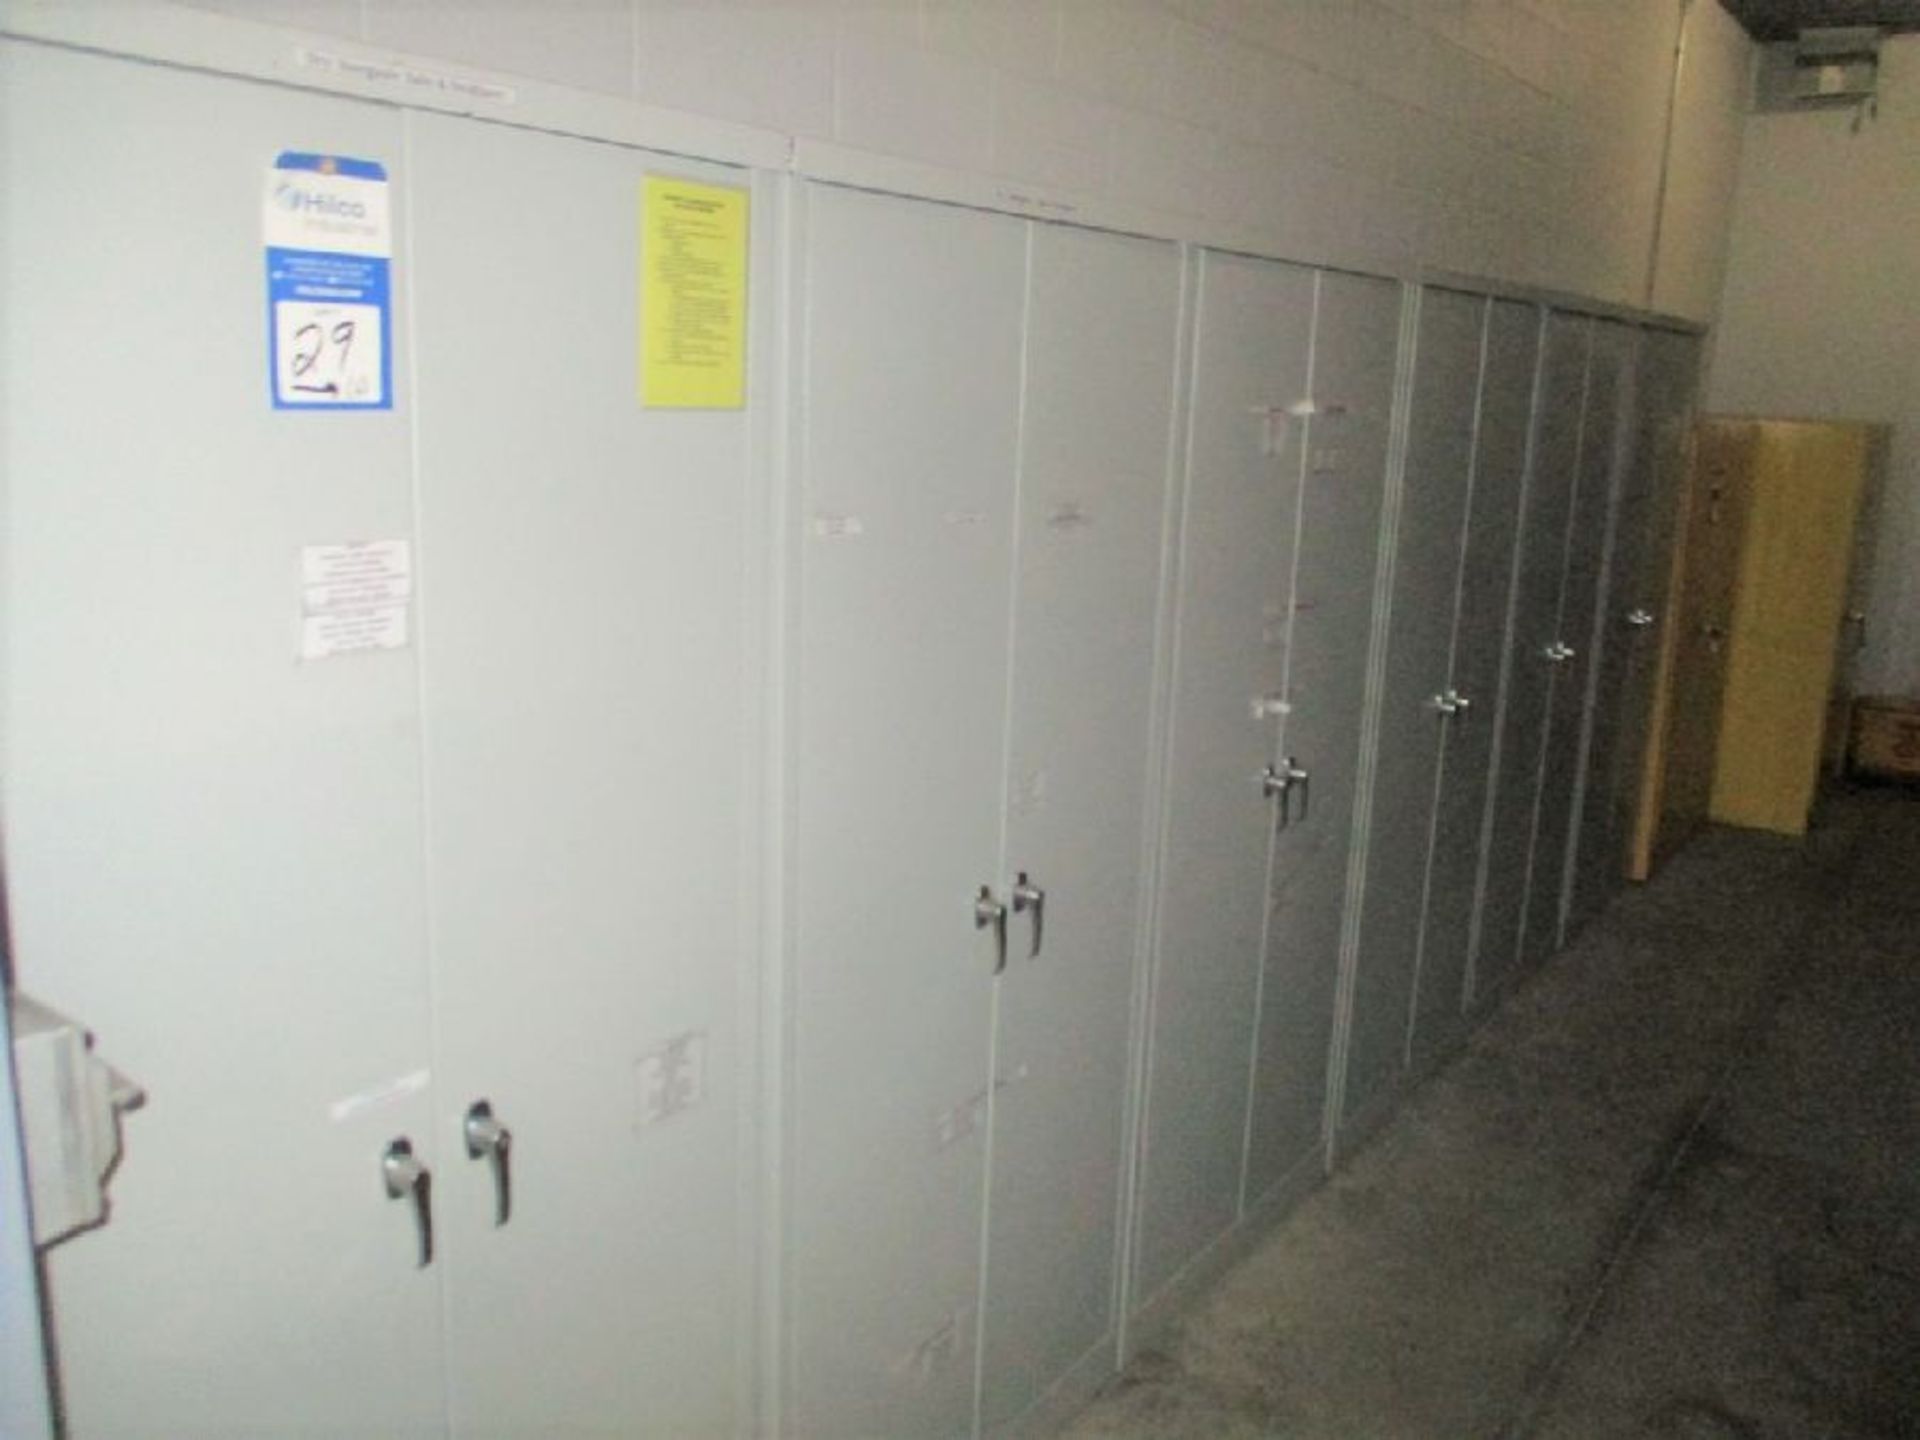 36"" W x 18"" D x 78"" H Steel Storage Cabinets